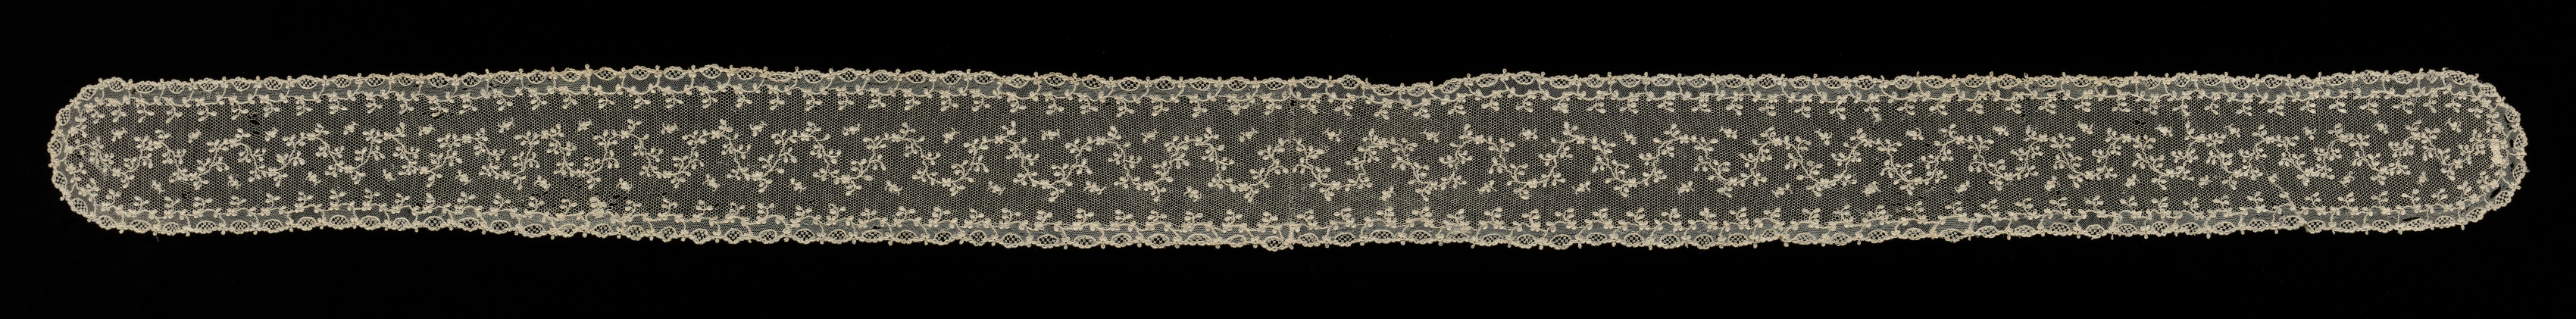 Needlepoint Lace Lappet